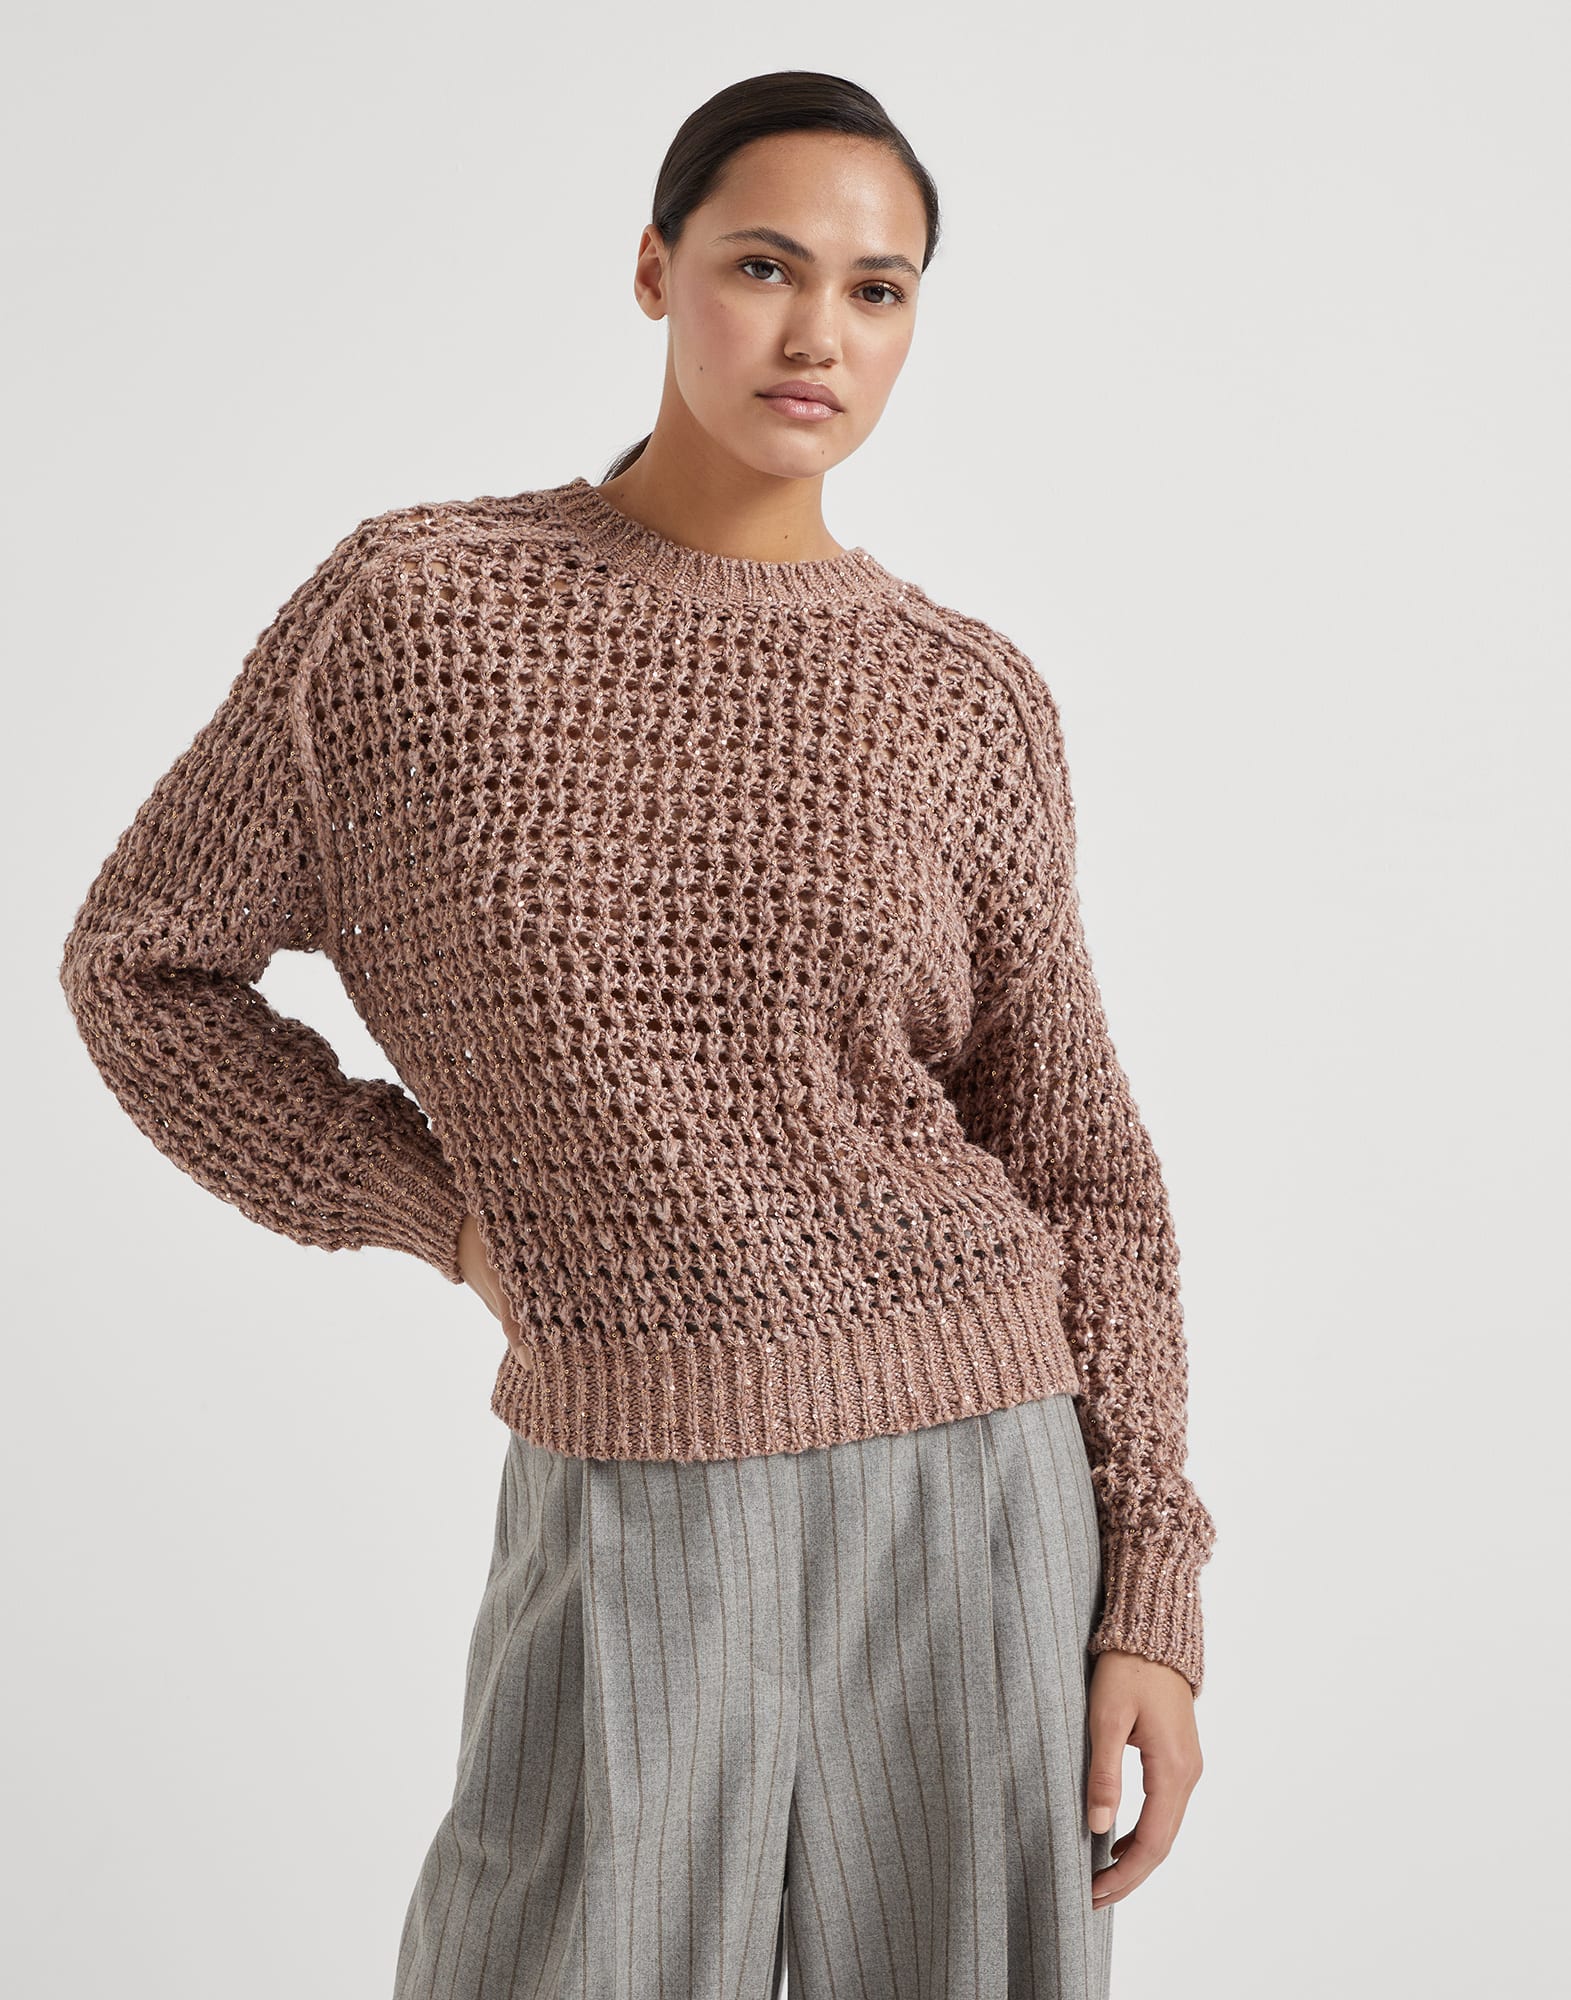 Rustic Dazzling Net Sweater